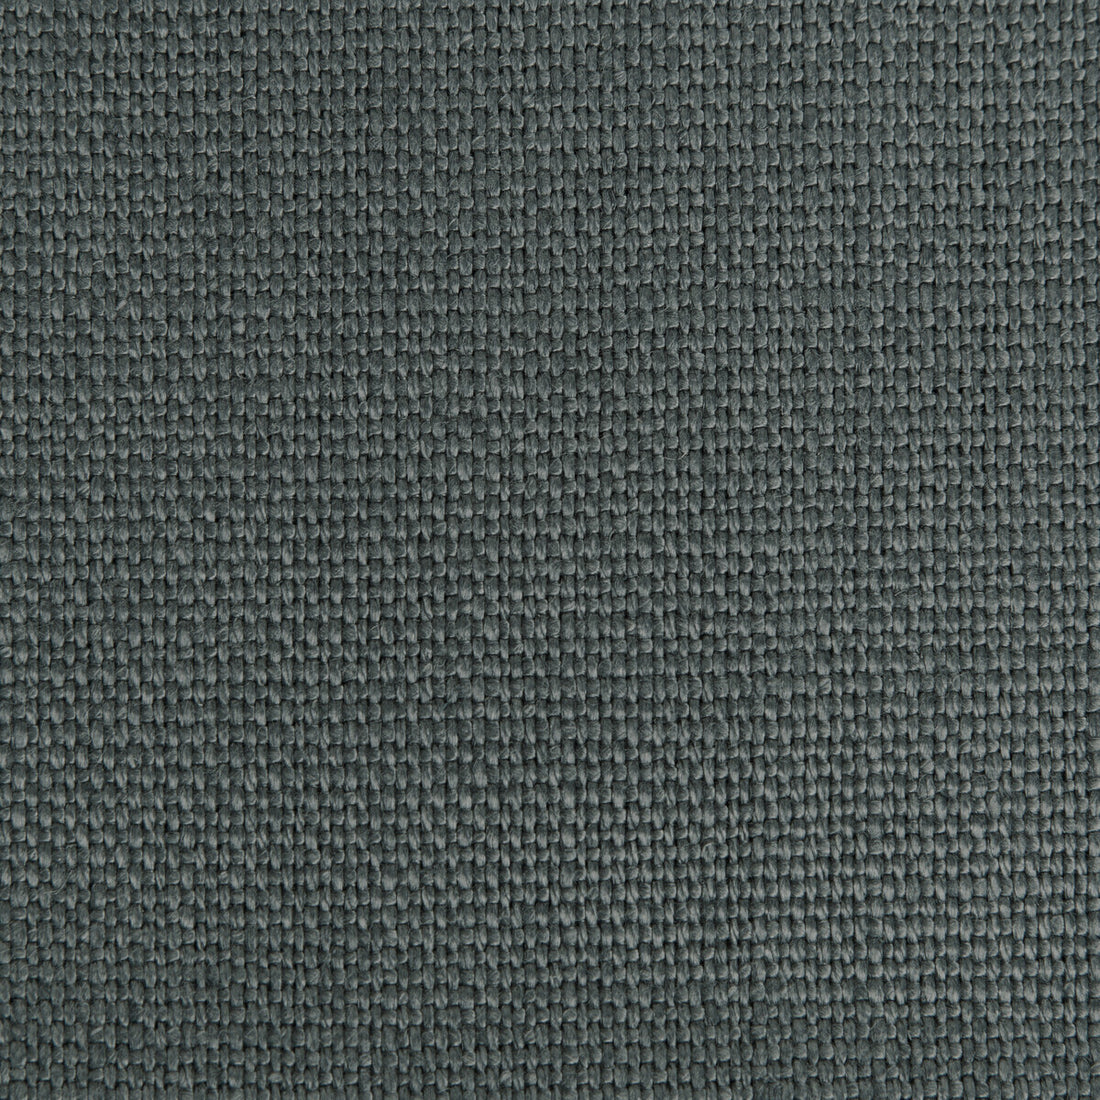 Stone Harbor fabric in bluestone color - pattern 27591.521.0 - by Kravet Basics